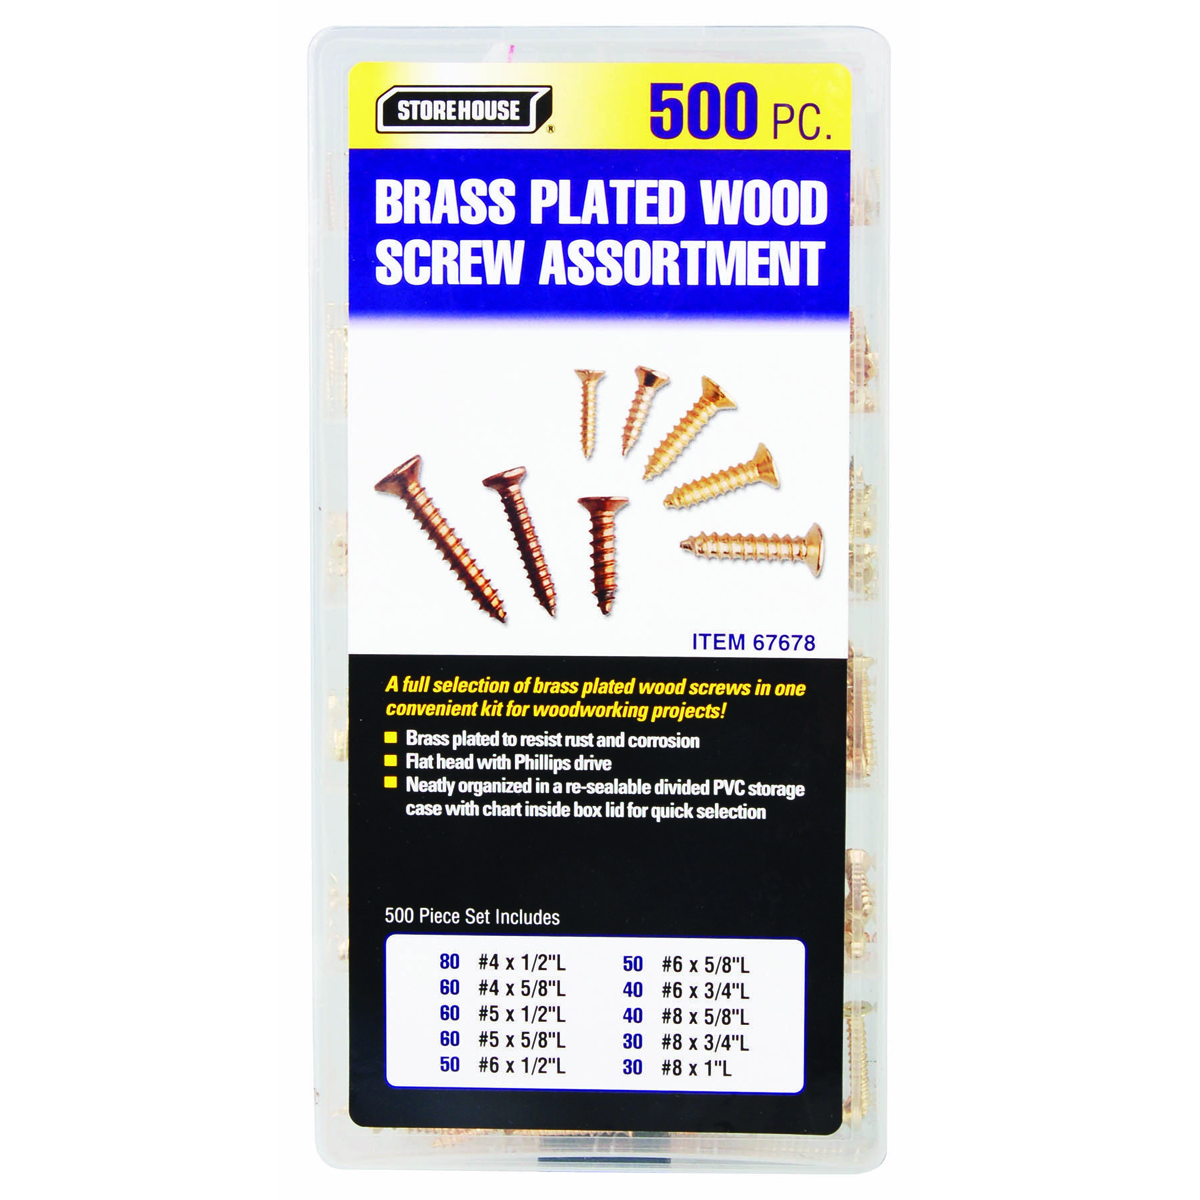 STOREHOUSE 500 Piece Brass Plated Wood Screw Assortment - Item 67678